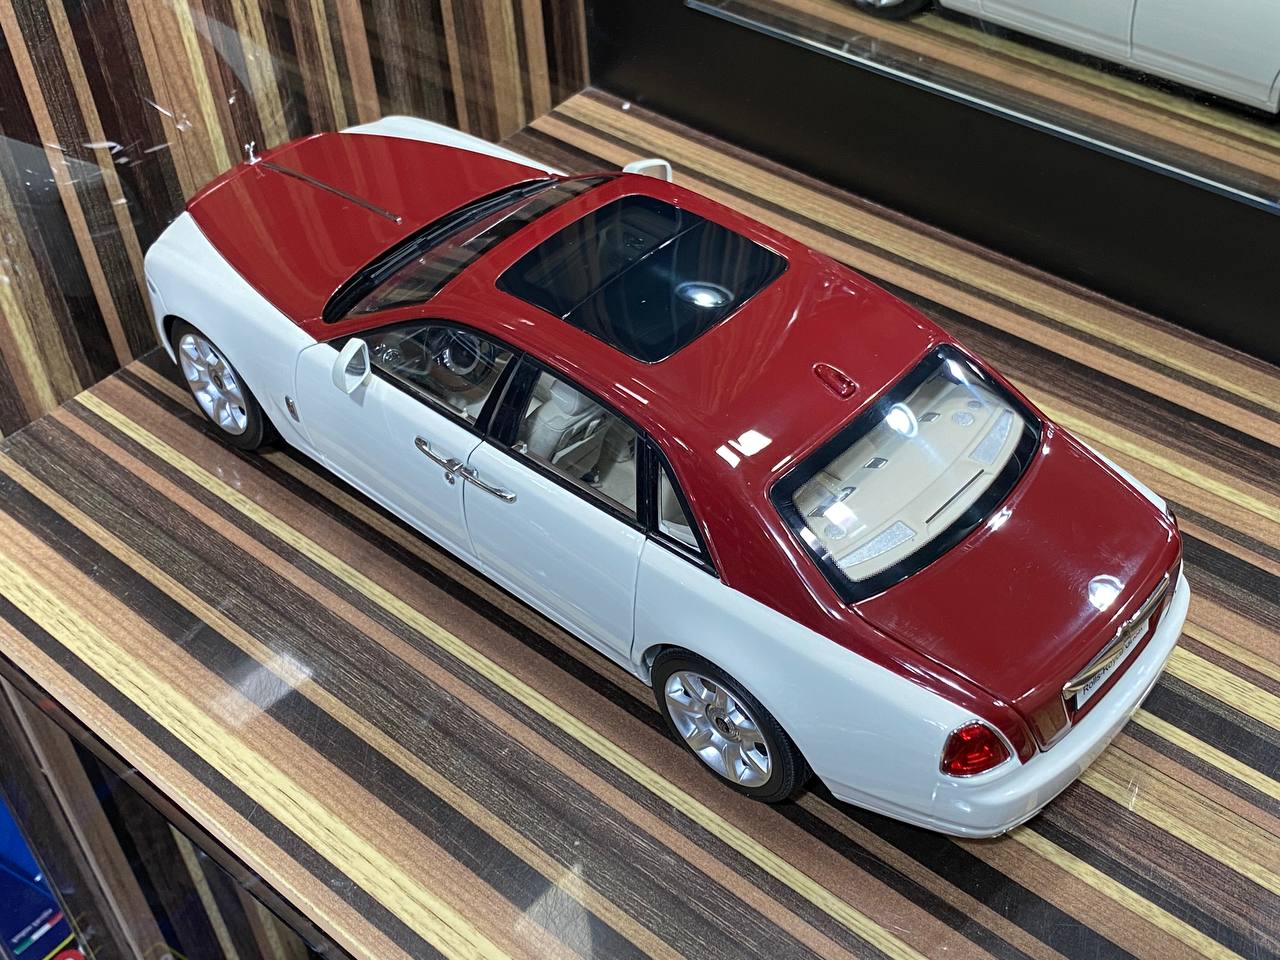 1/18 Diecast Rolls-Royce Ghost Kyosho Scale Model Car|Sold in Dturman.com Dubai UAE.